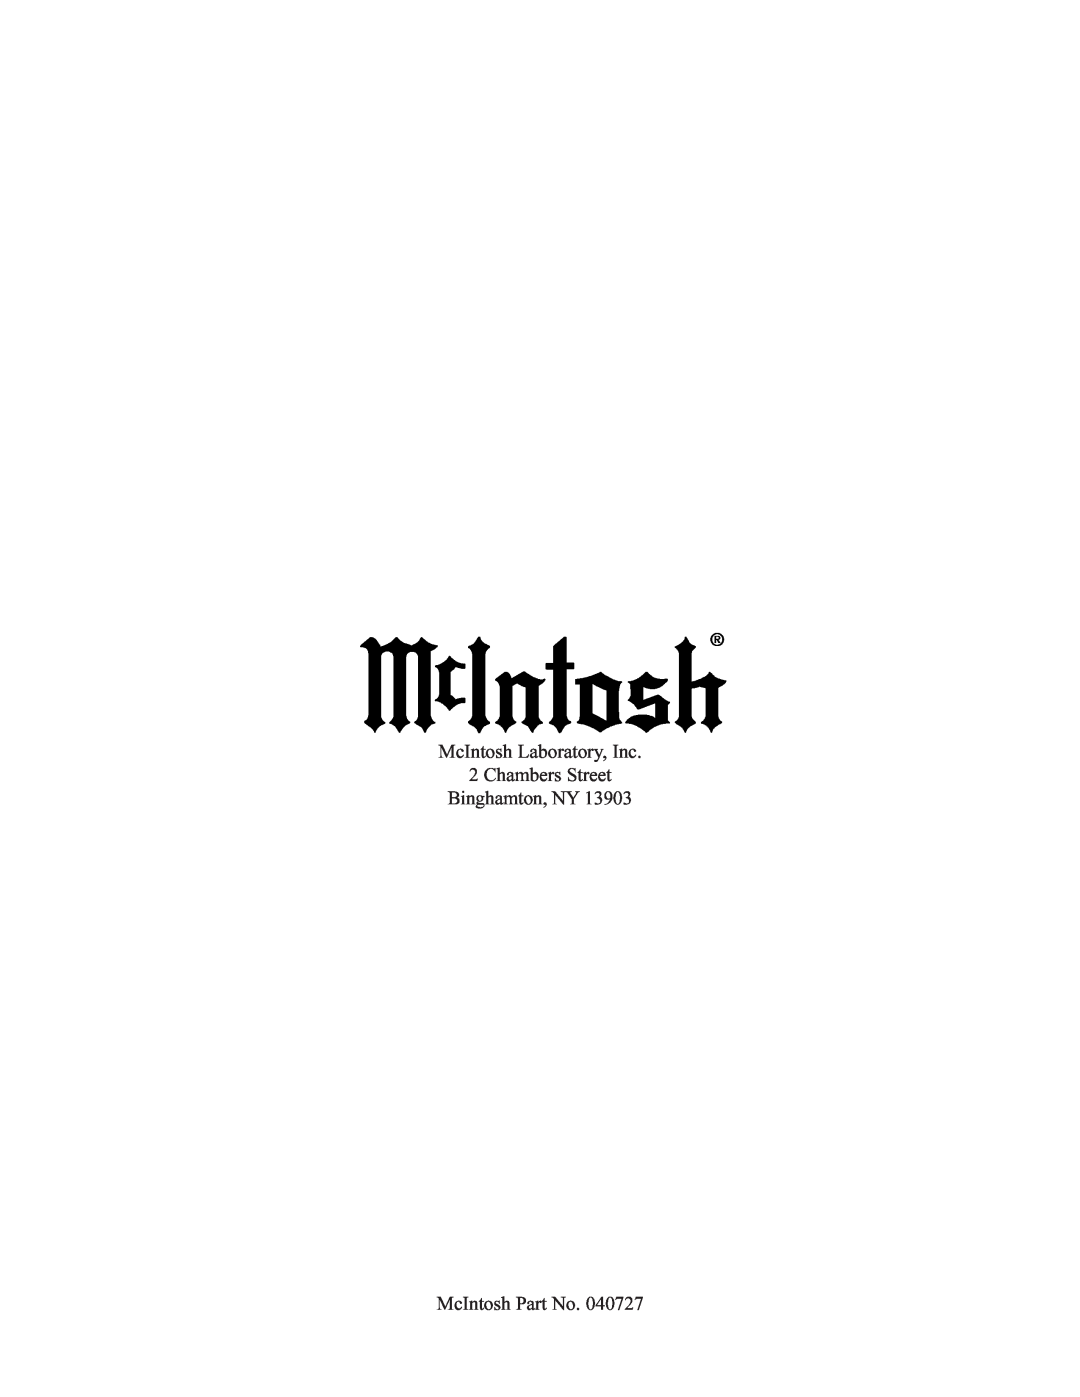 McIntosh MC1201 manual McIntosh Laboratory, Inc 2 Chambers Street, Binghamton, NY, McIntosh Part No 